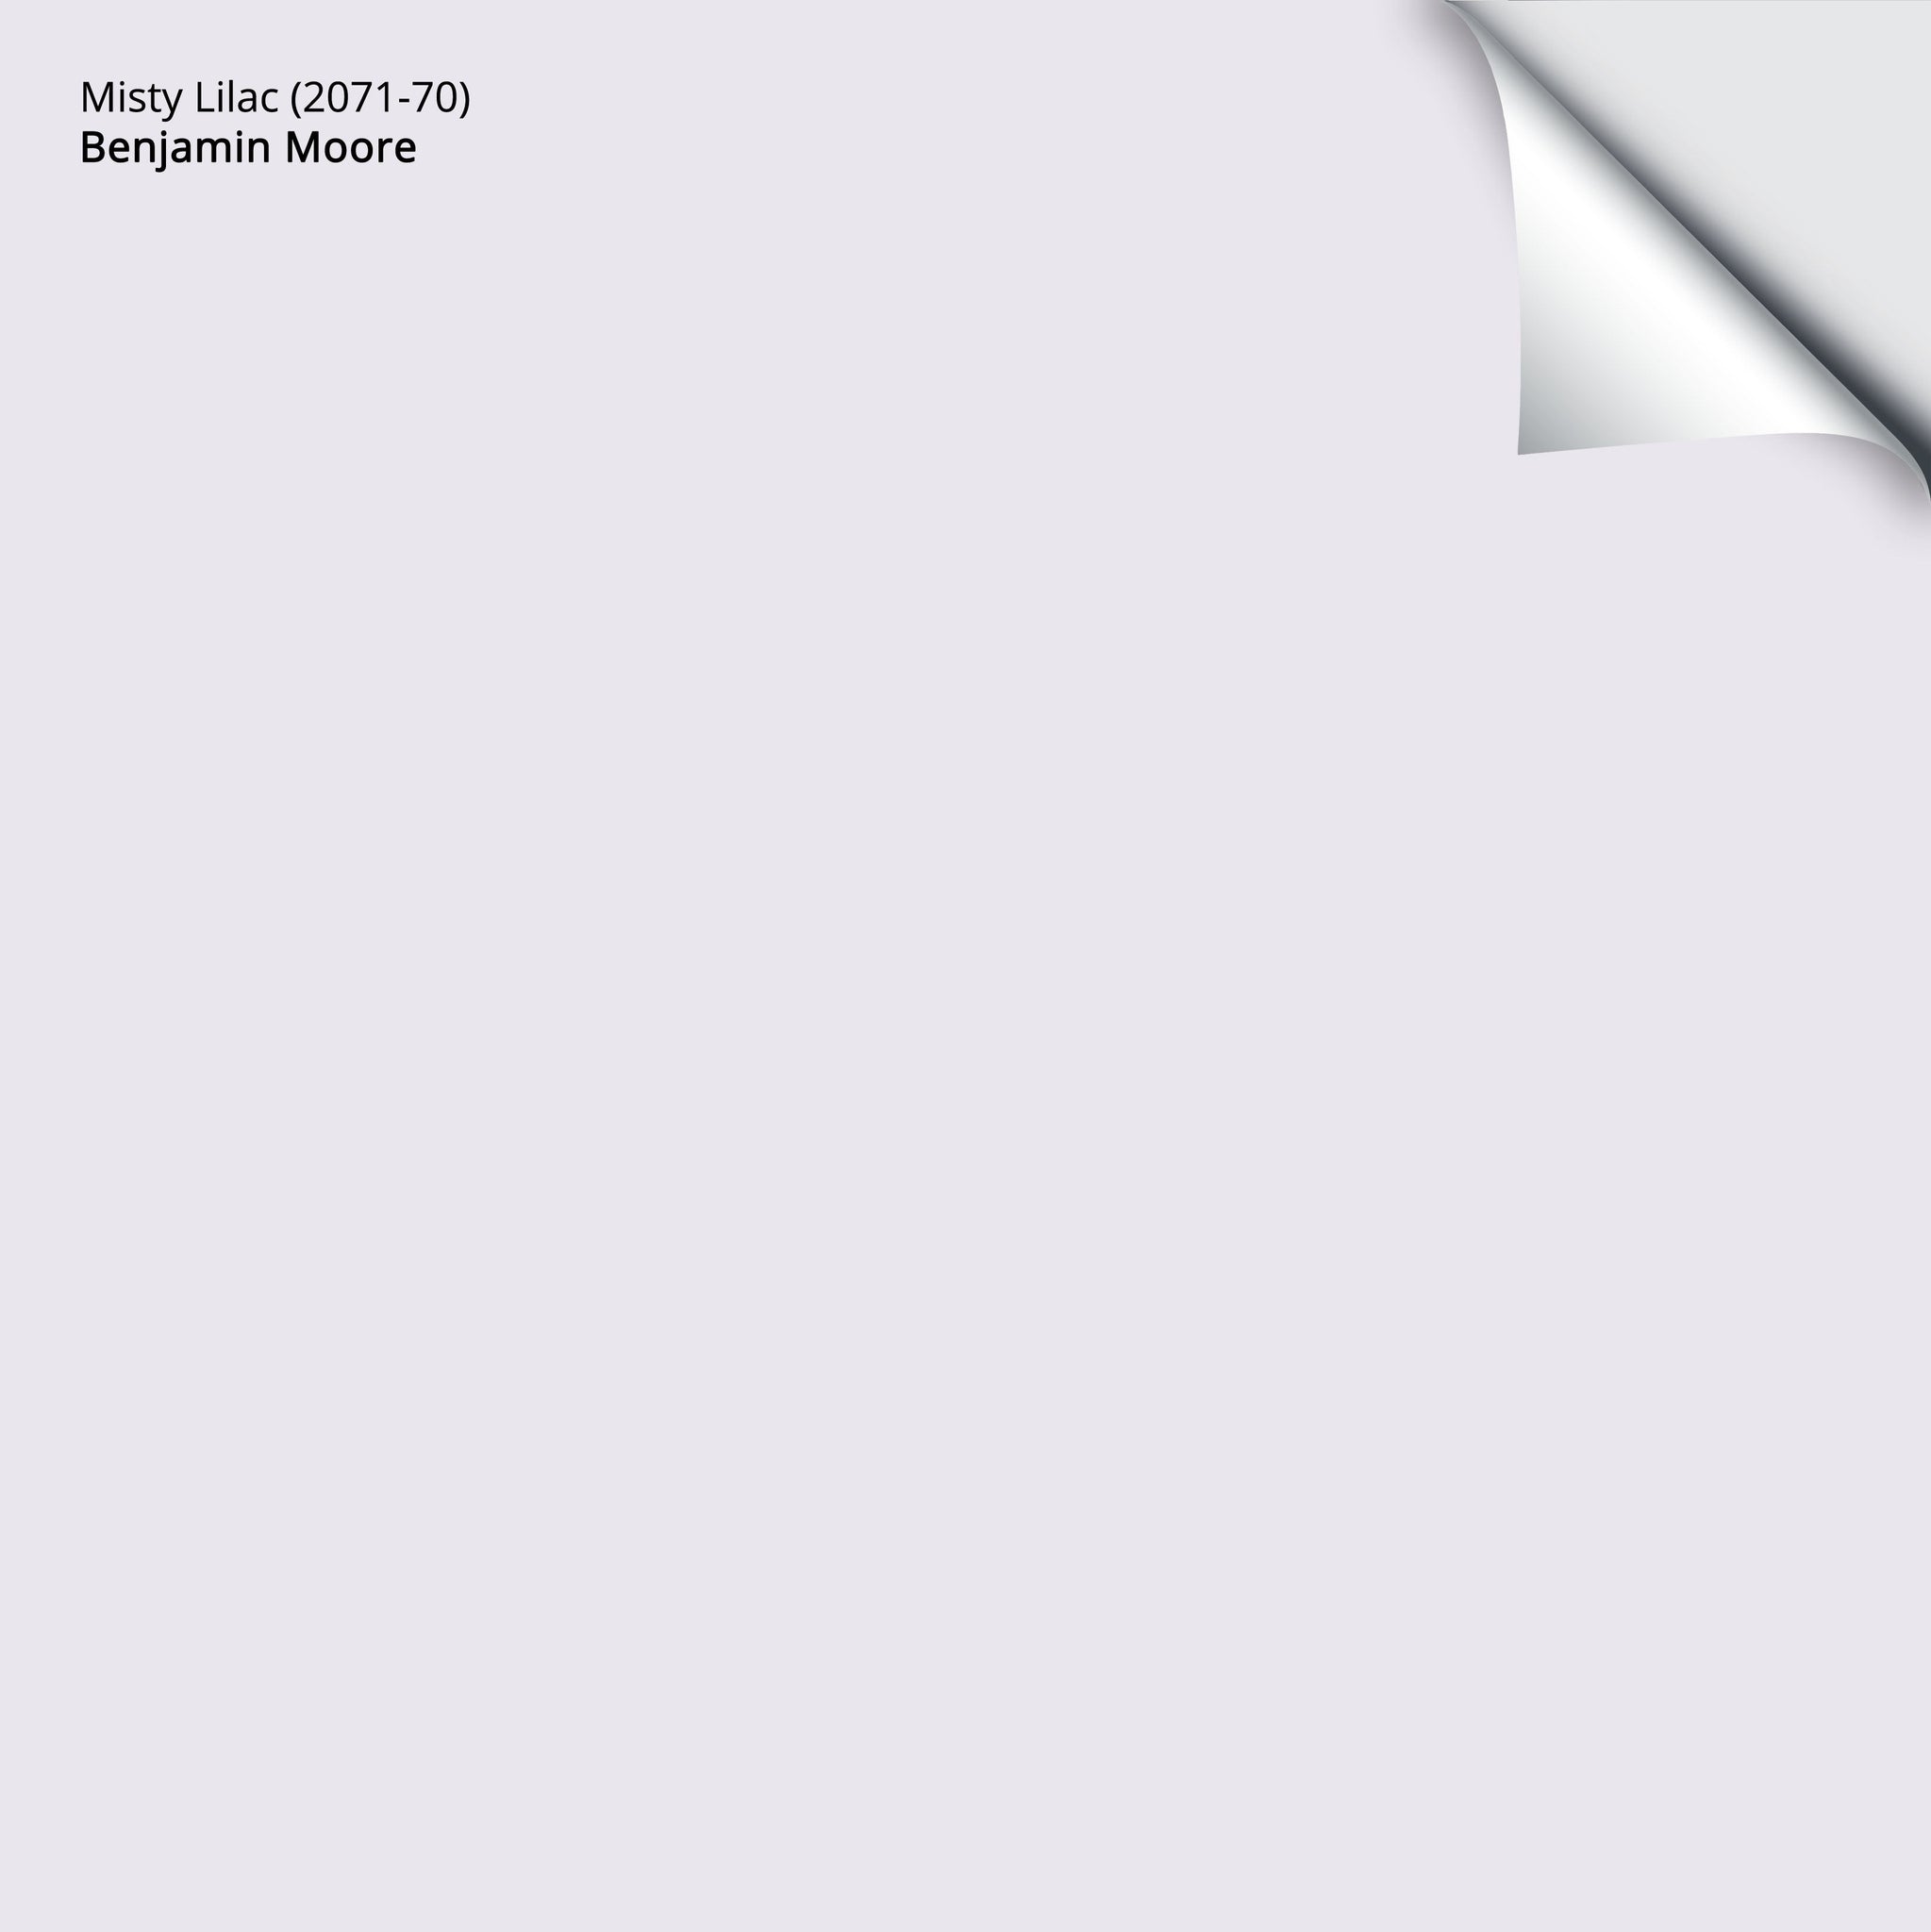 Misty Lilac (2071-70): 9x14.75 – Benjamin Moore x Samplize